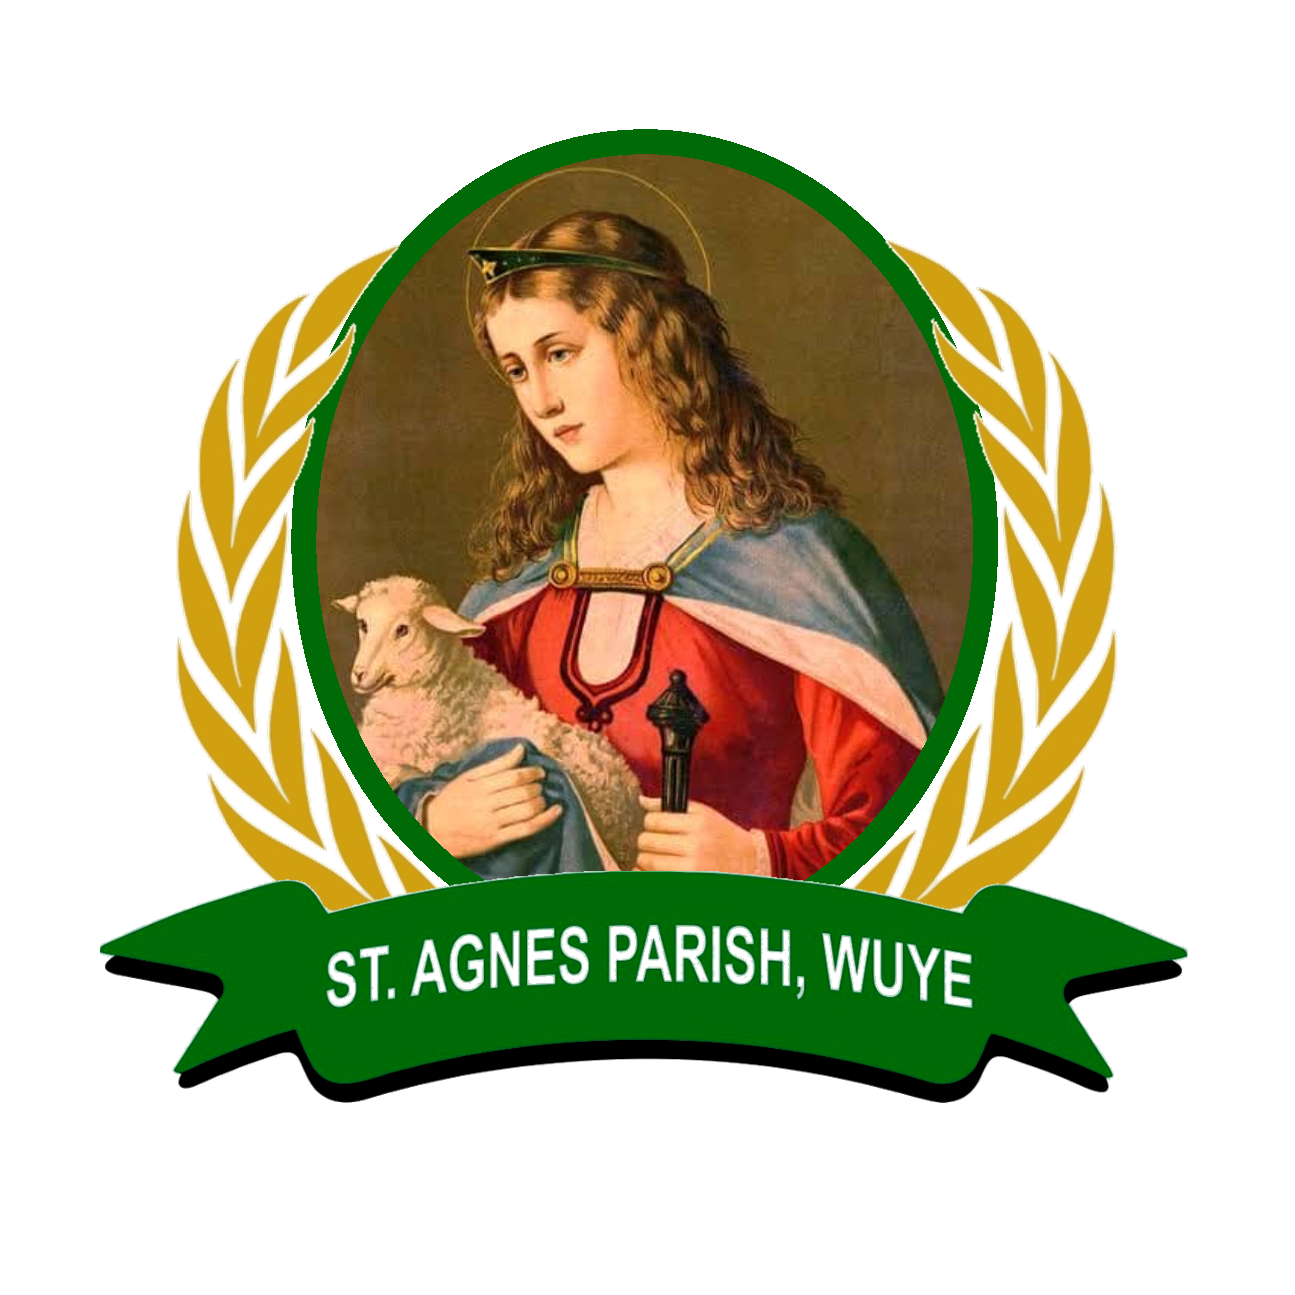 The New Parish Logo